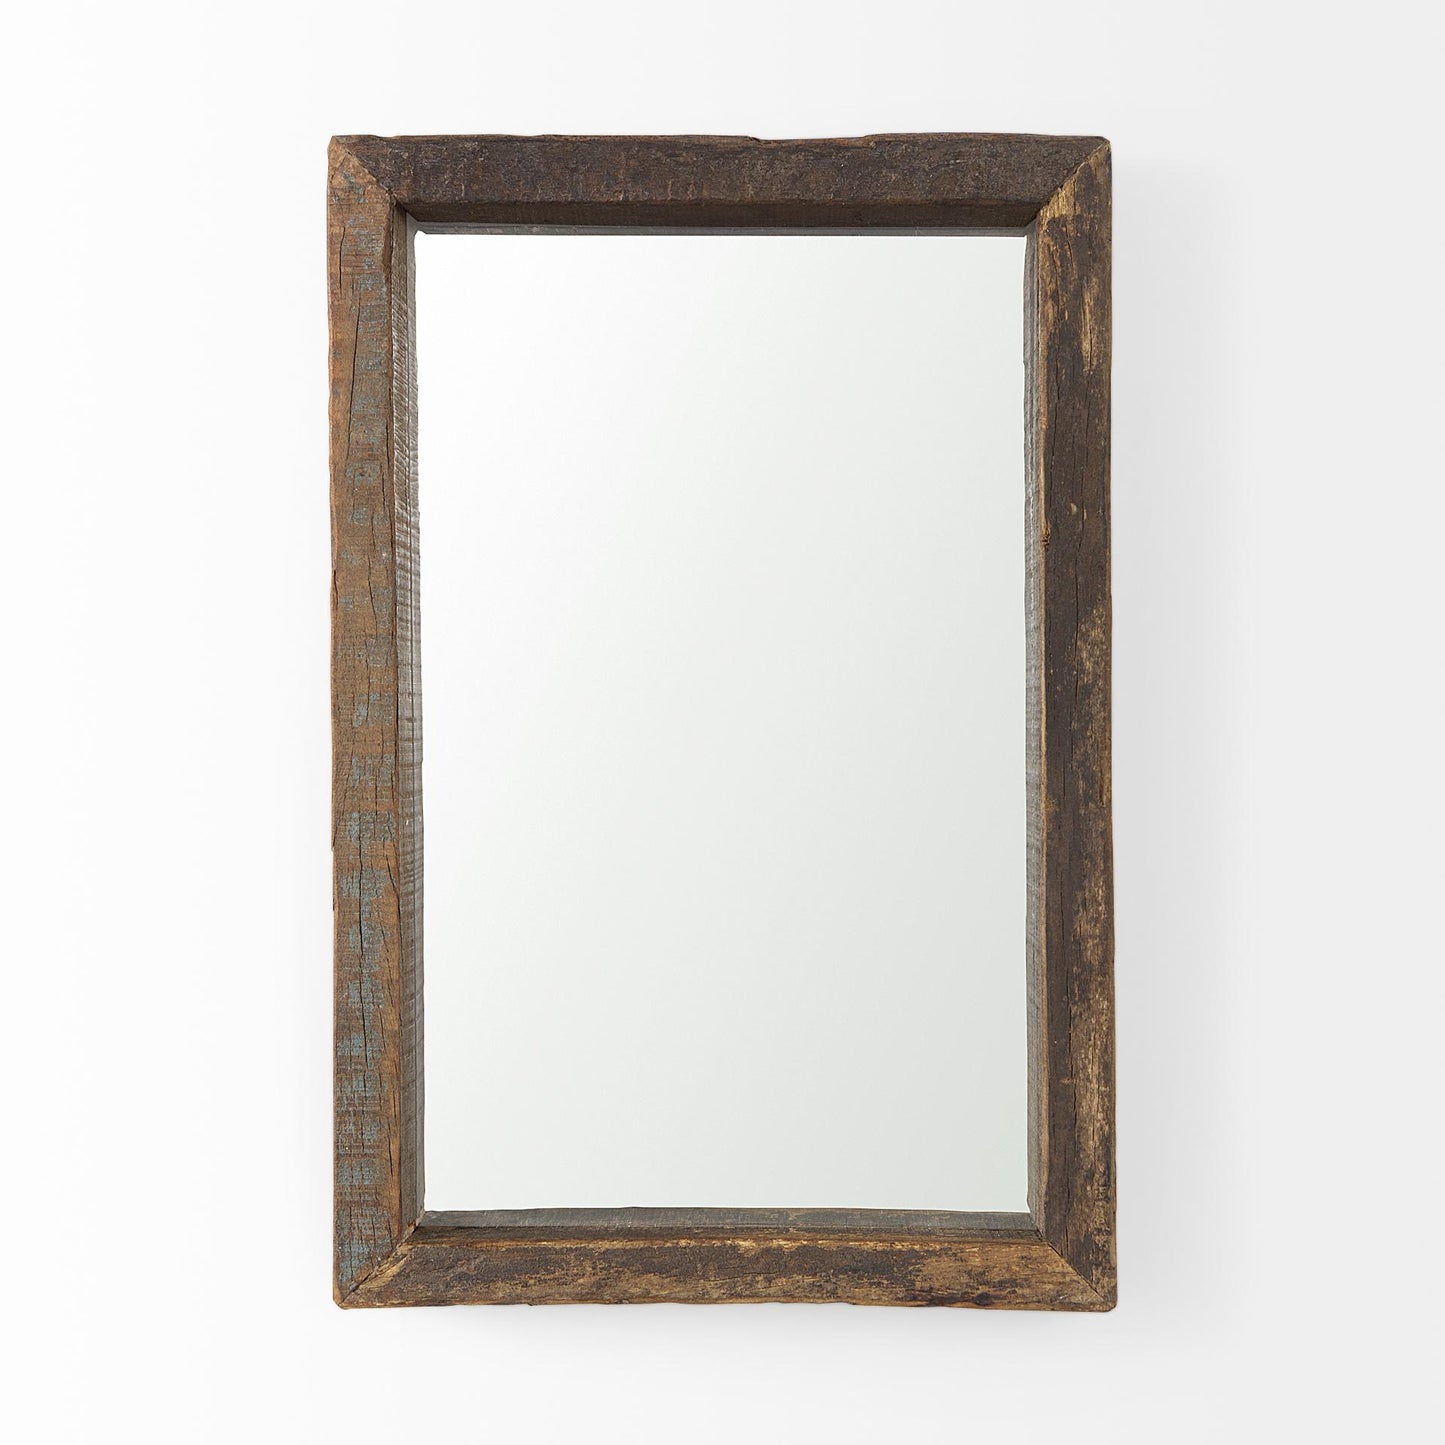 Gervaise 12L x 2W x 18H Brown Wood Frame Rectangular Wall Mirror